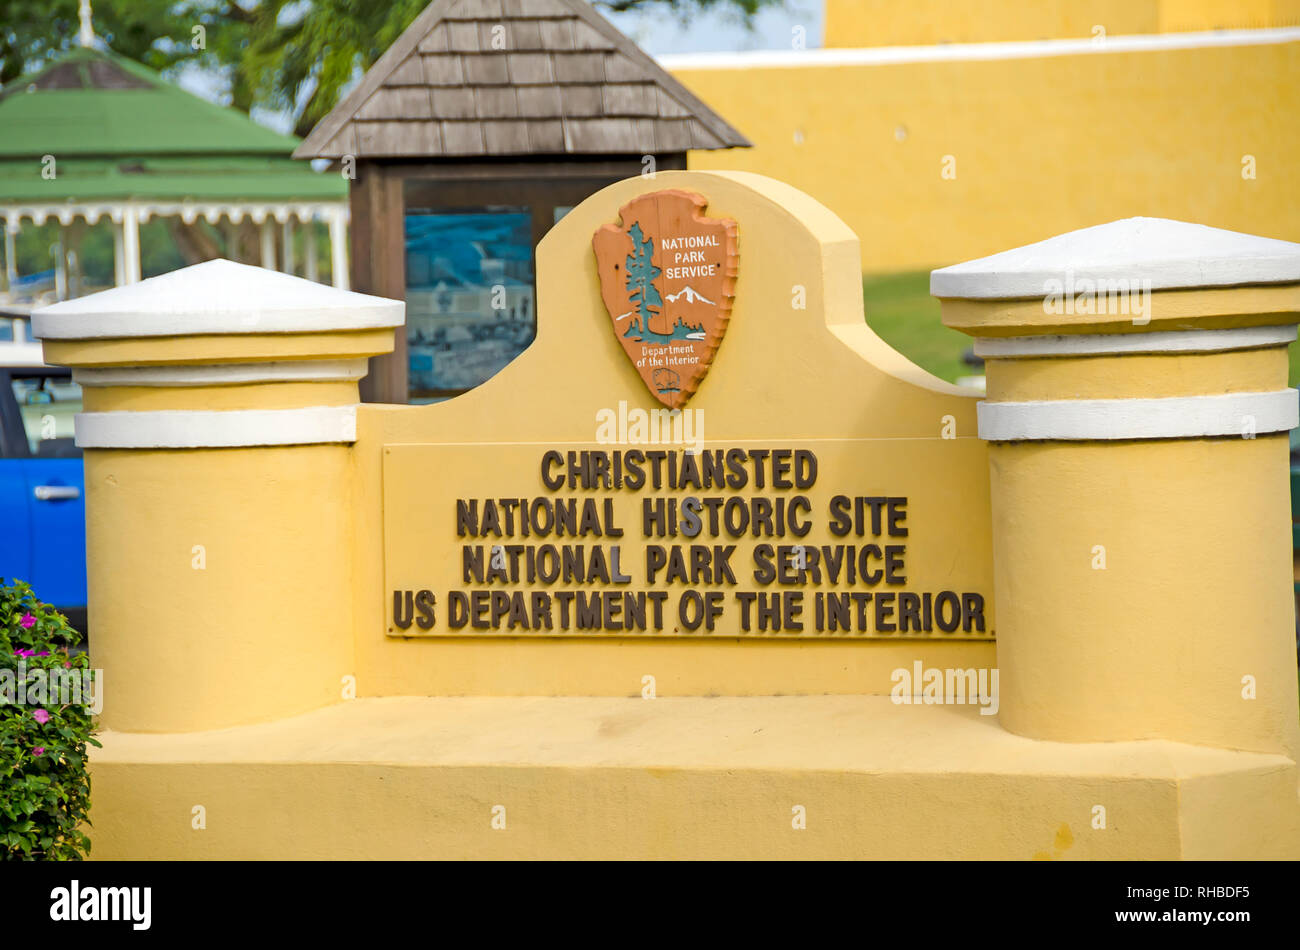 Christiansted National Historic Site National Park Service US Department del marcatore interno segno, Saint Croix, U.S. Isole vergini Foto Stock